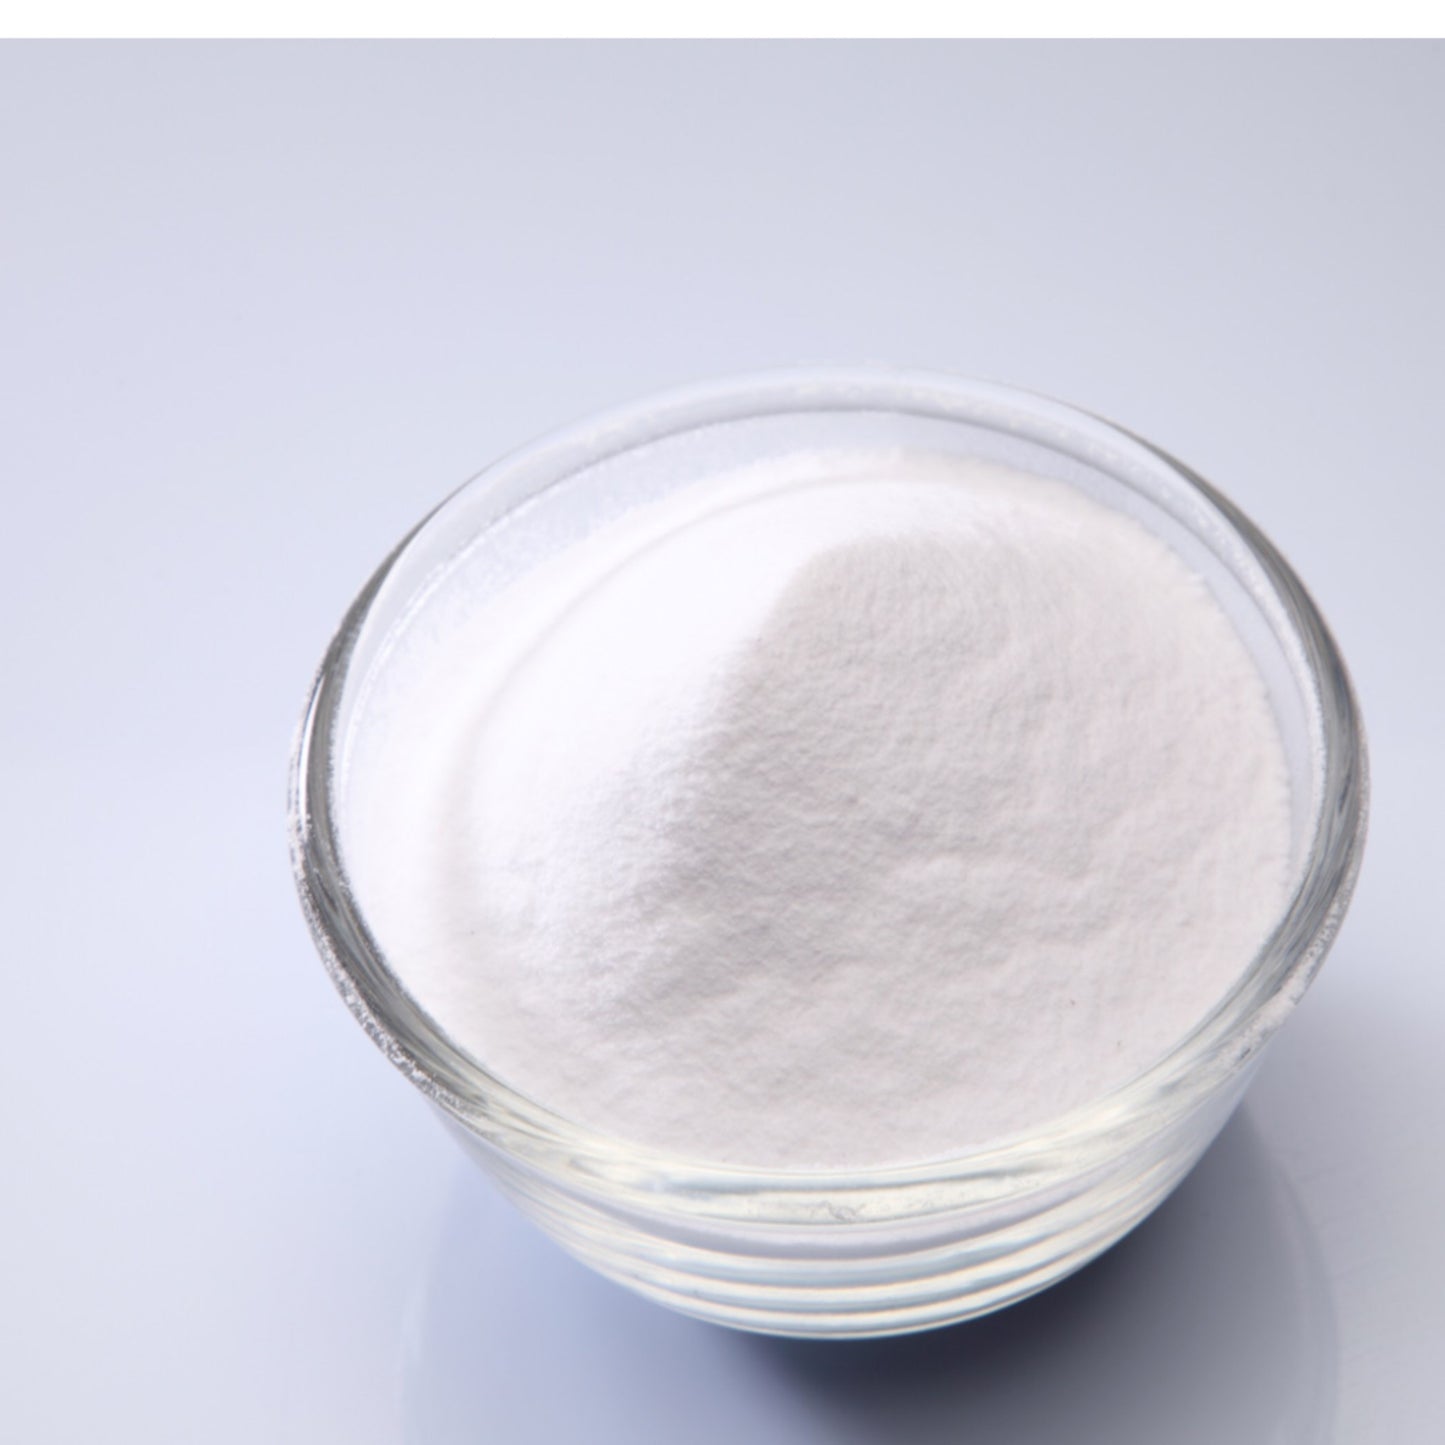 2 Sodium Bicarbonate - Two Ingredients